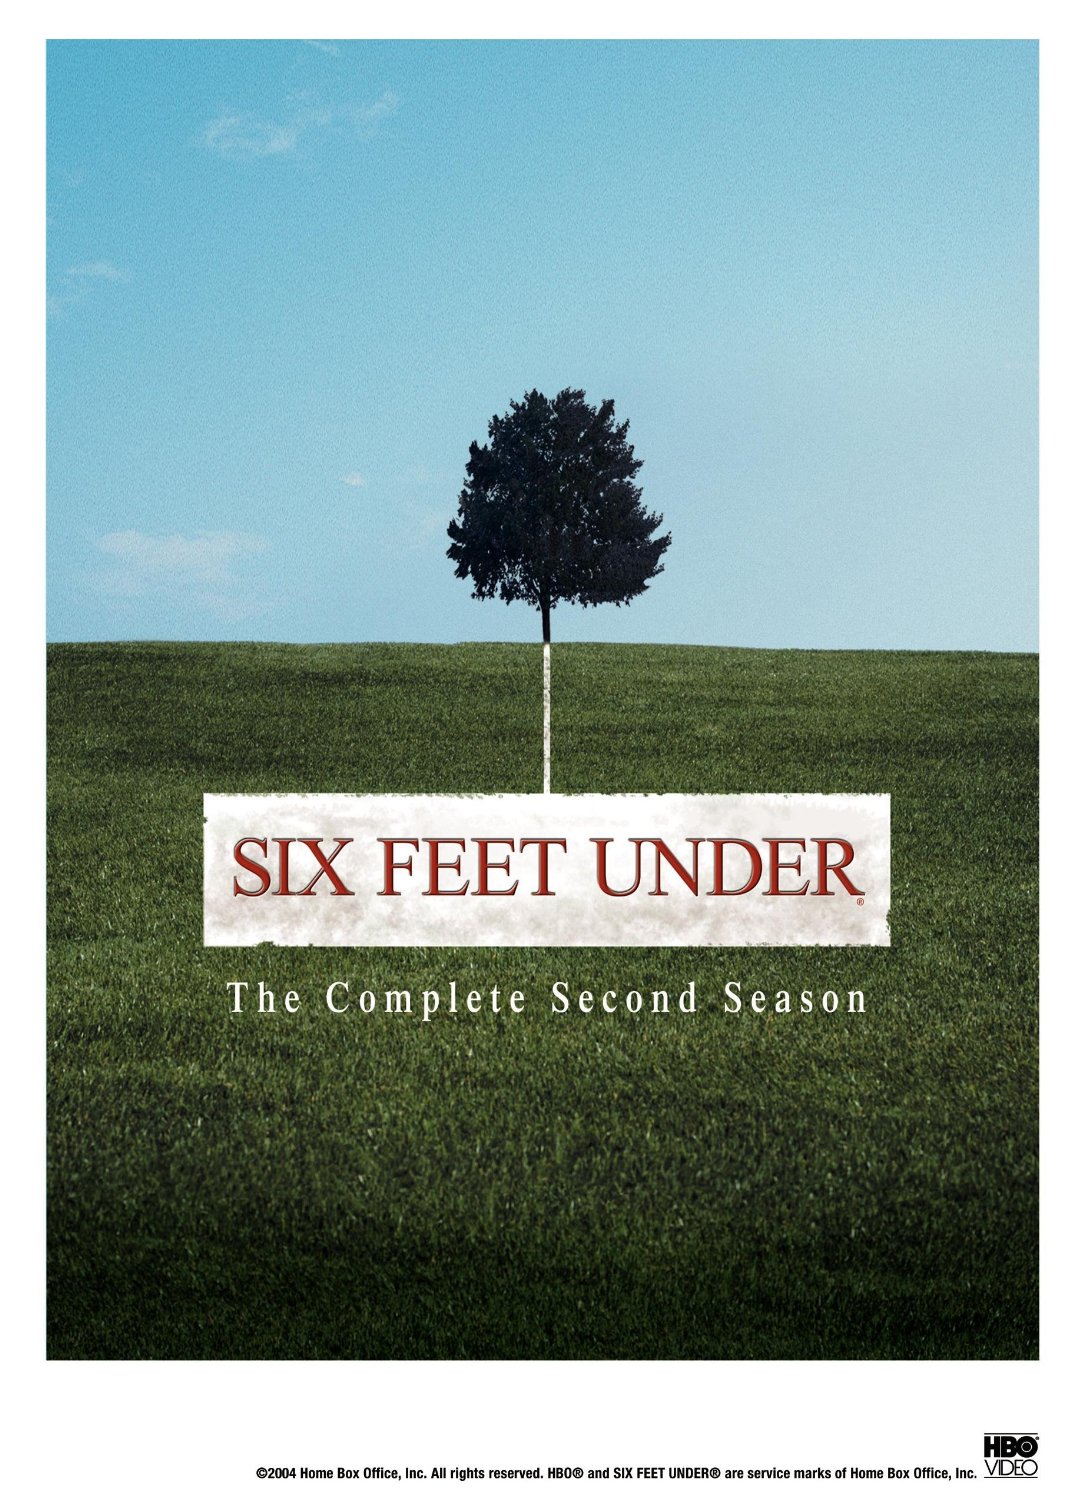 Six Feet Under #5